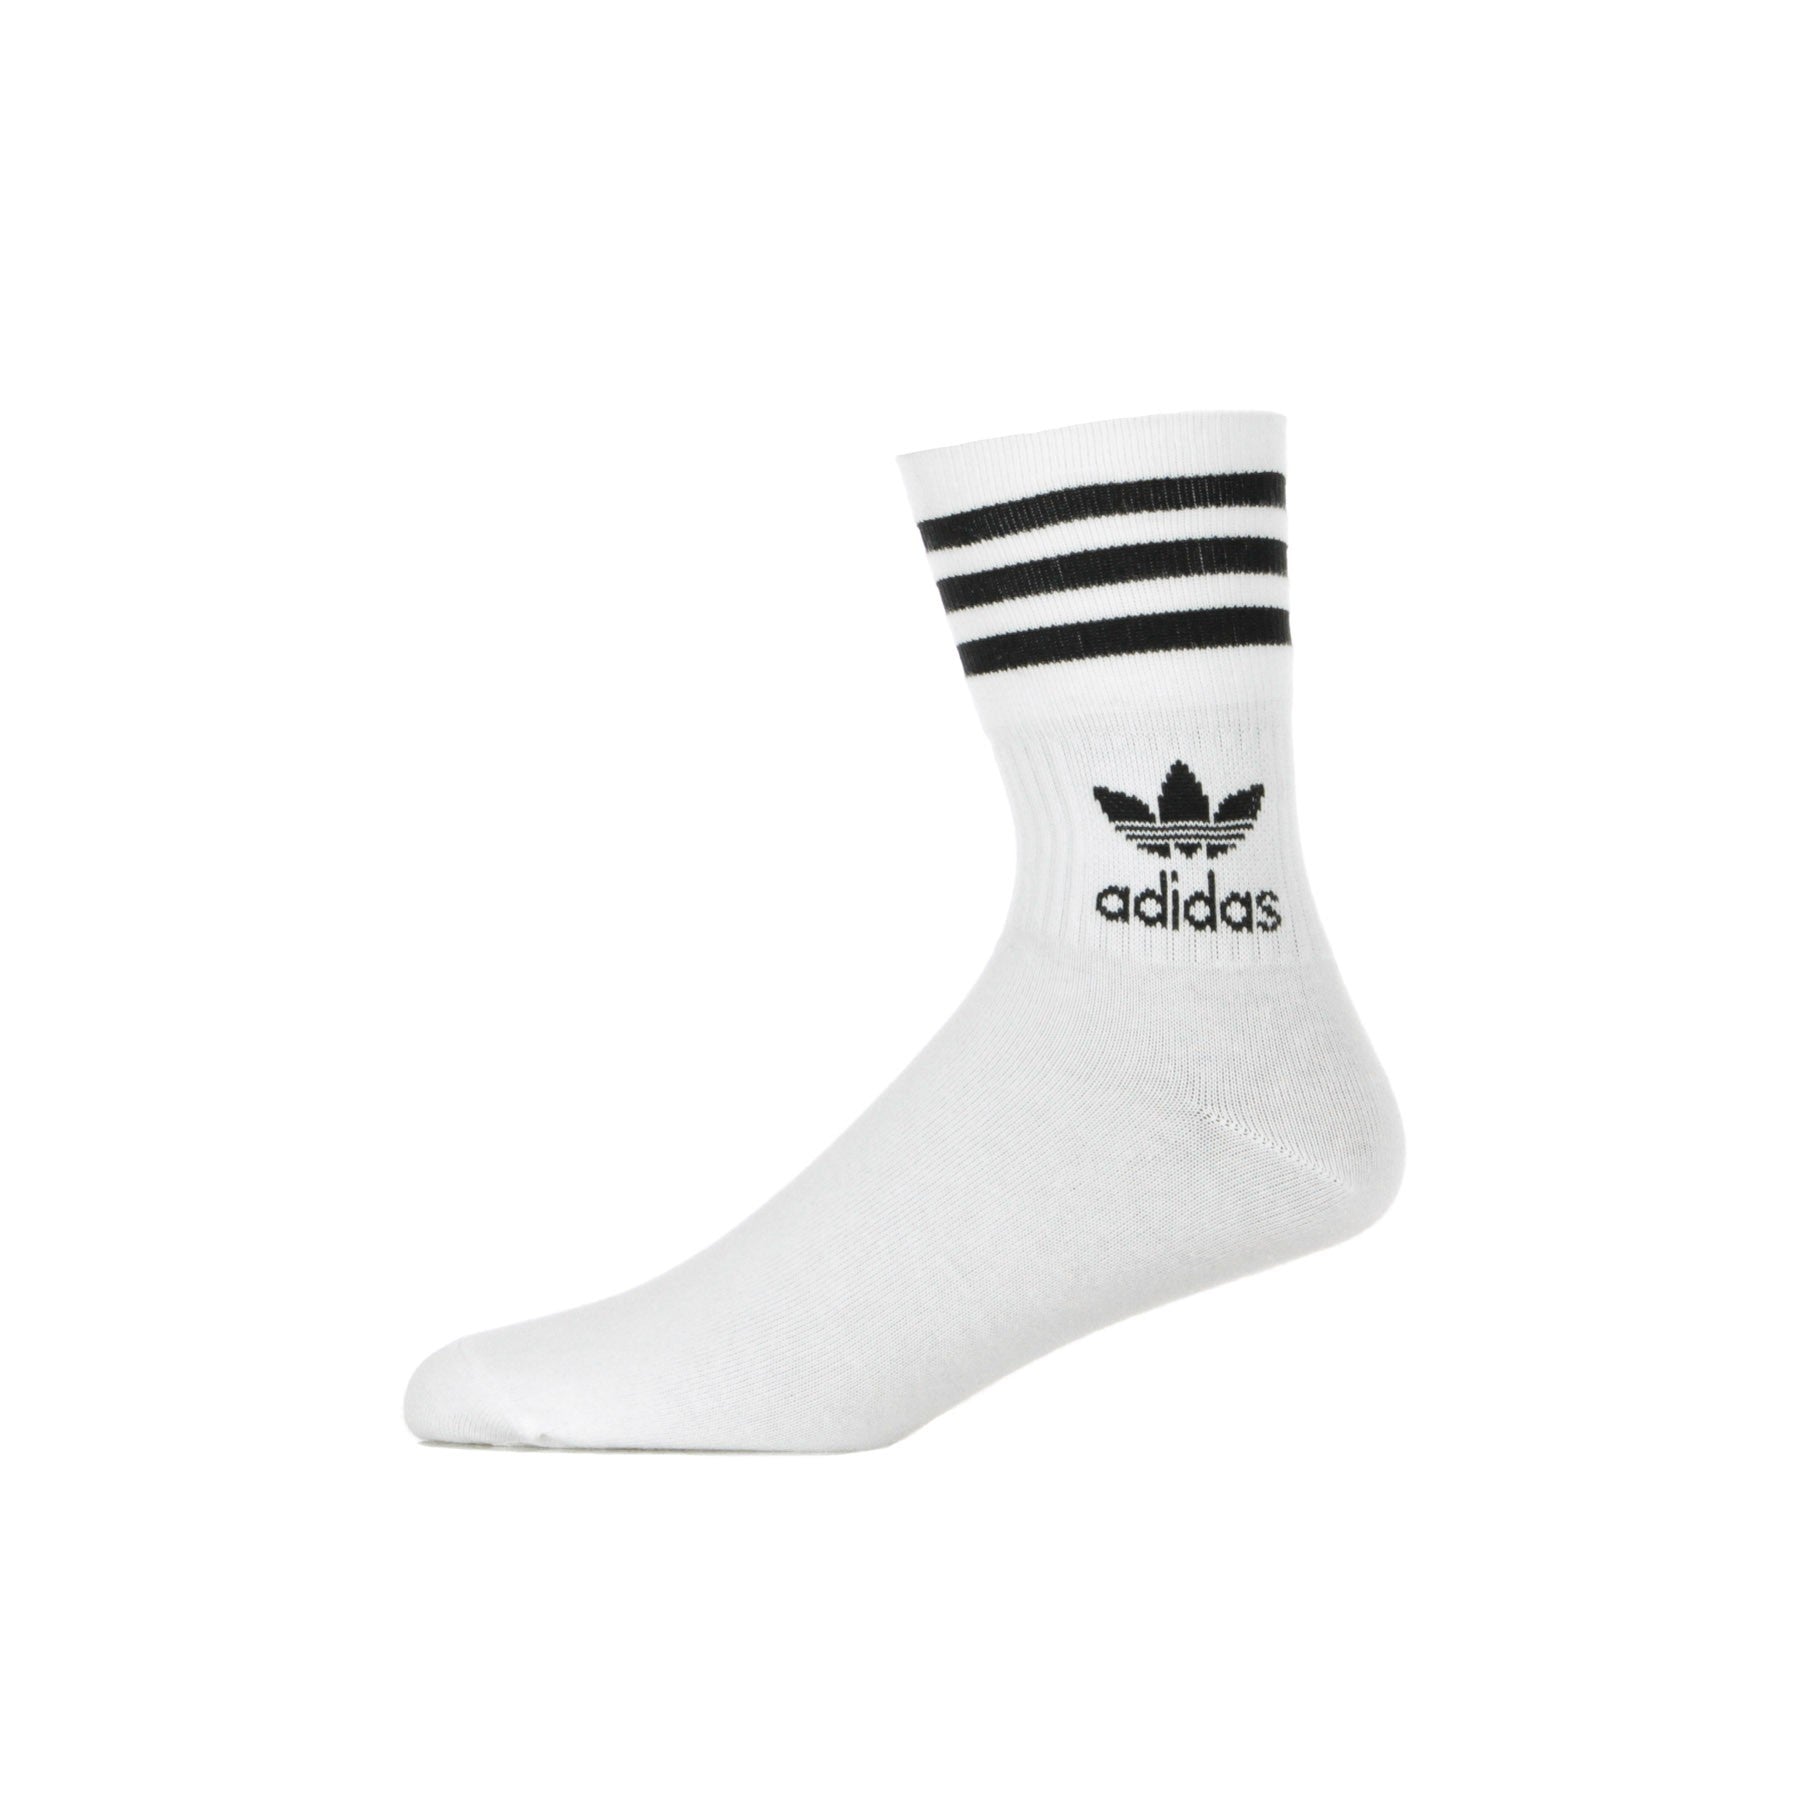 Adidas, Calza Media Uomo Mid Cut Crew Socks, White/black